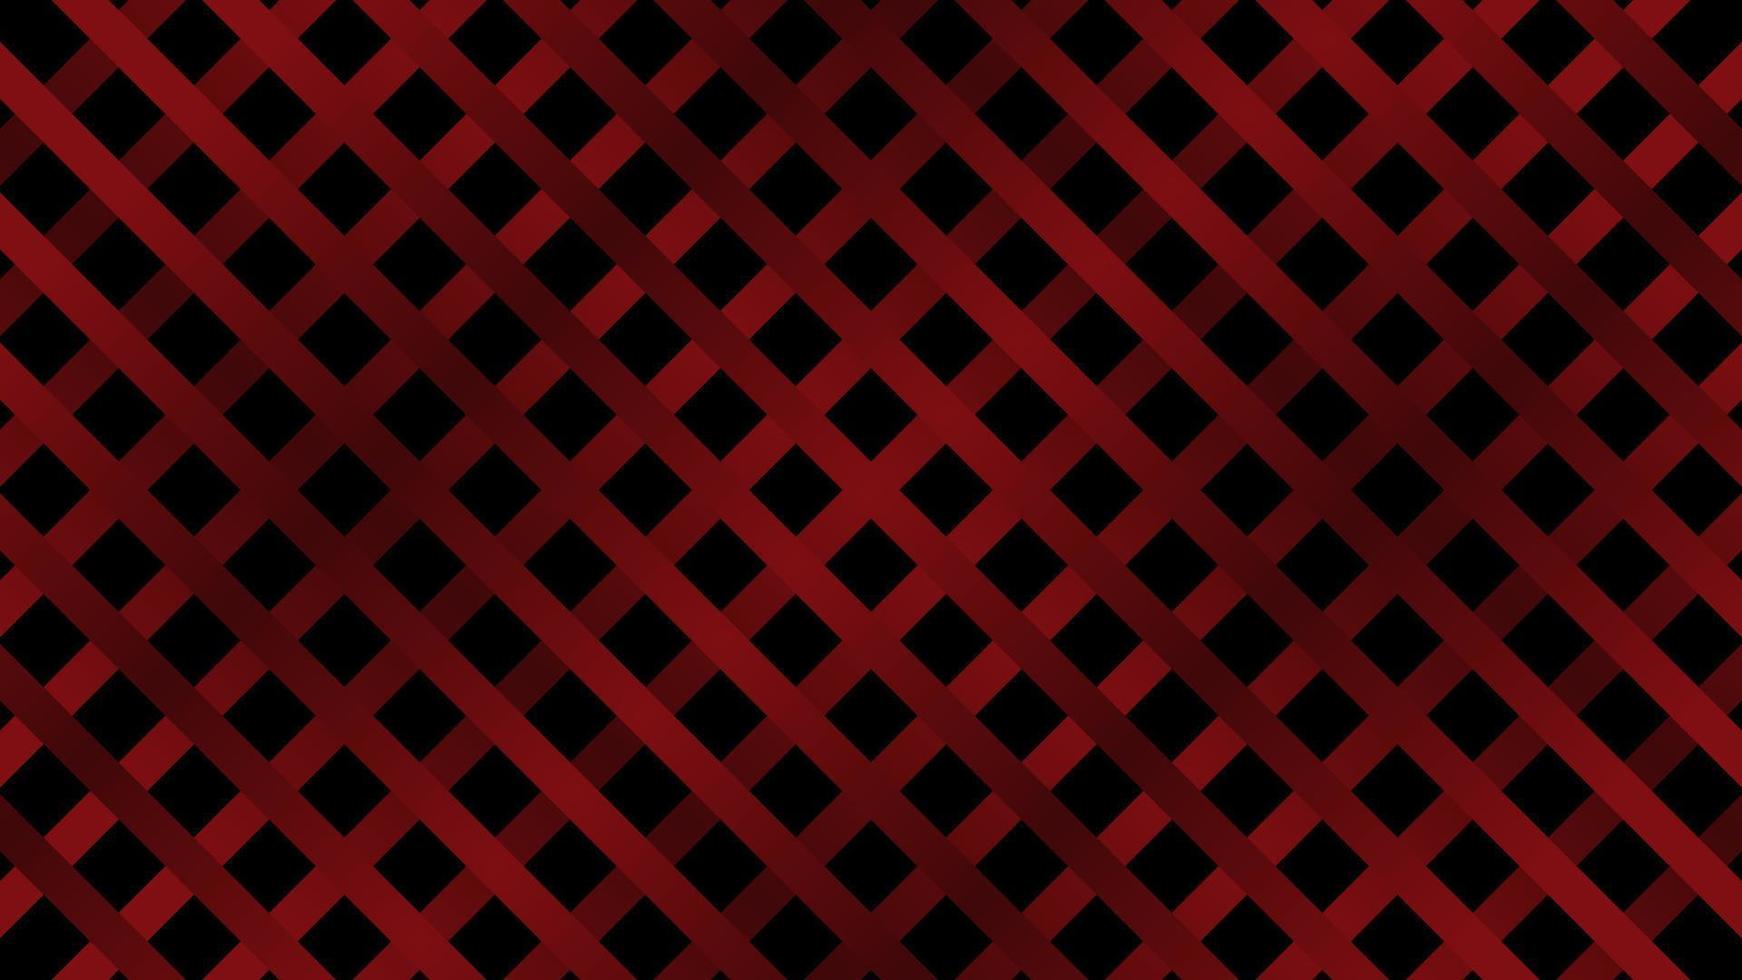 Modern futuristic red net illustration on a black background.Modern futuristic red net illustration on a black background. vector